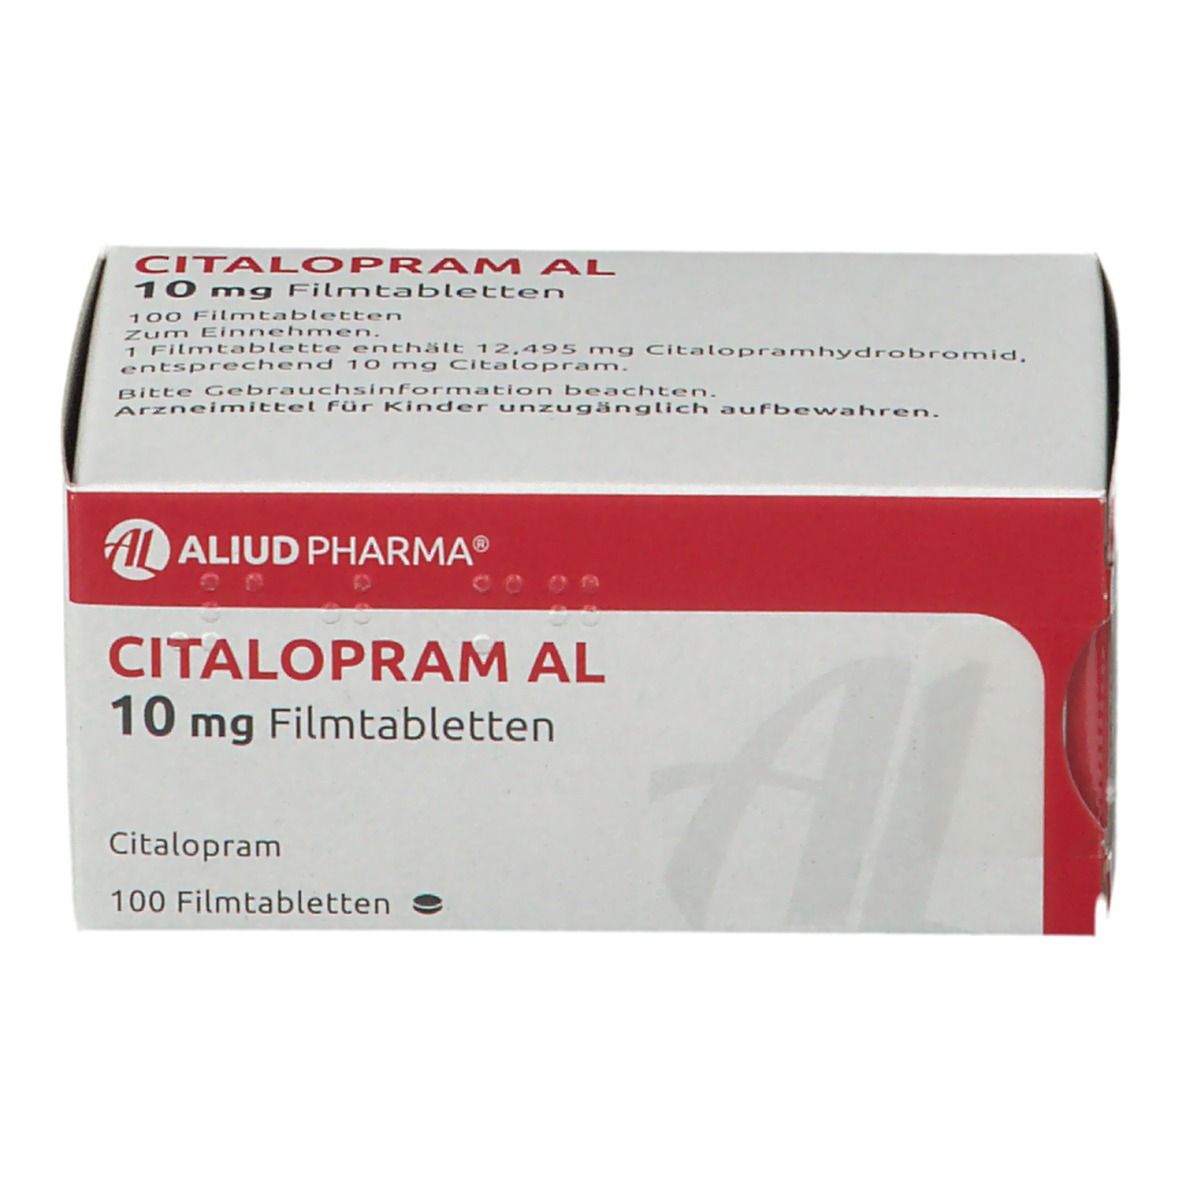 Citalopram AL 10 mg